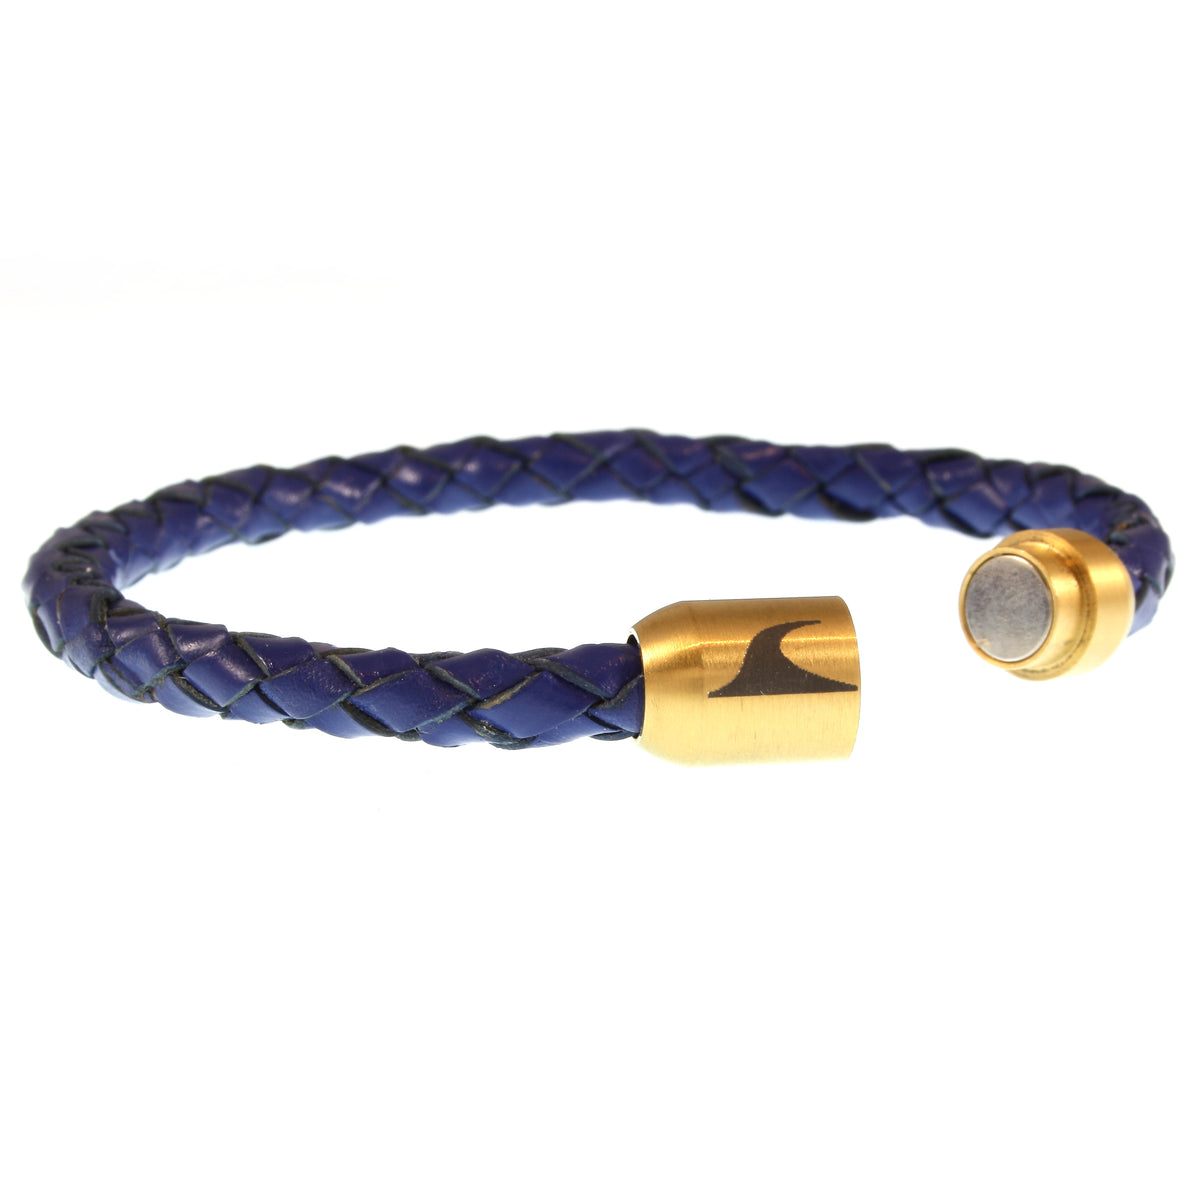 Herren-leder-armband-damen-sylt-blau-gold-geflochten-Edelstahlverschluss-offen-wavepirate-shop-f